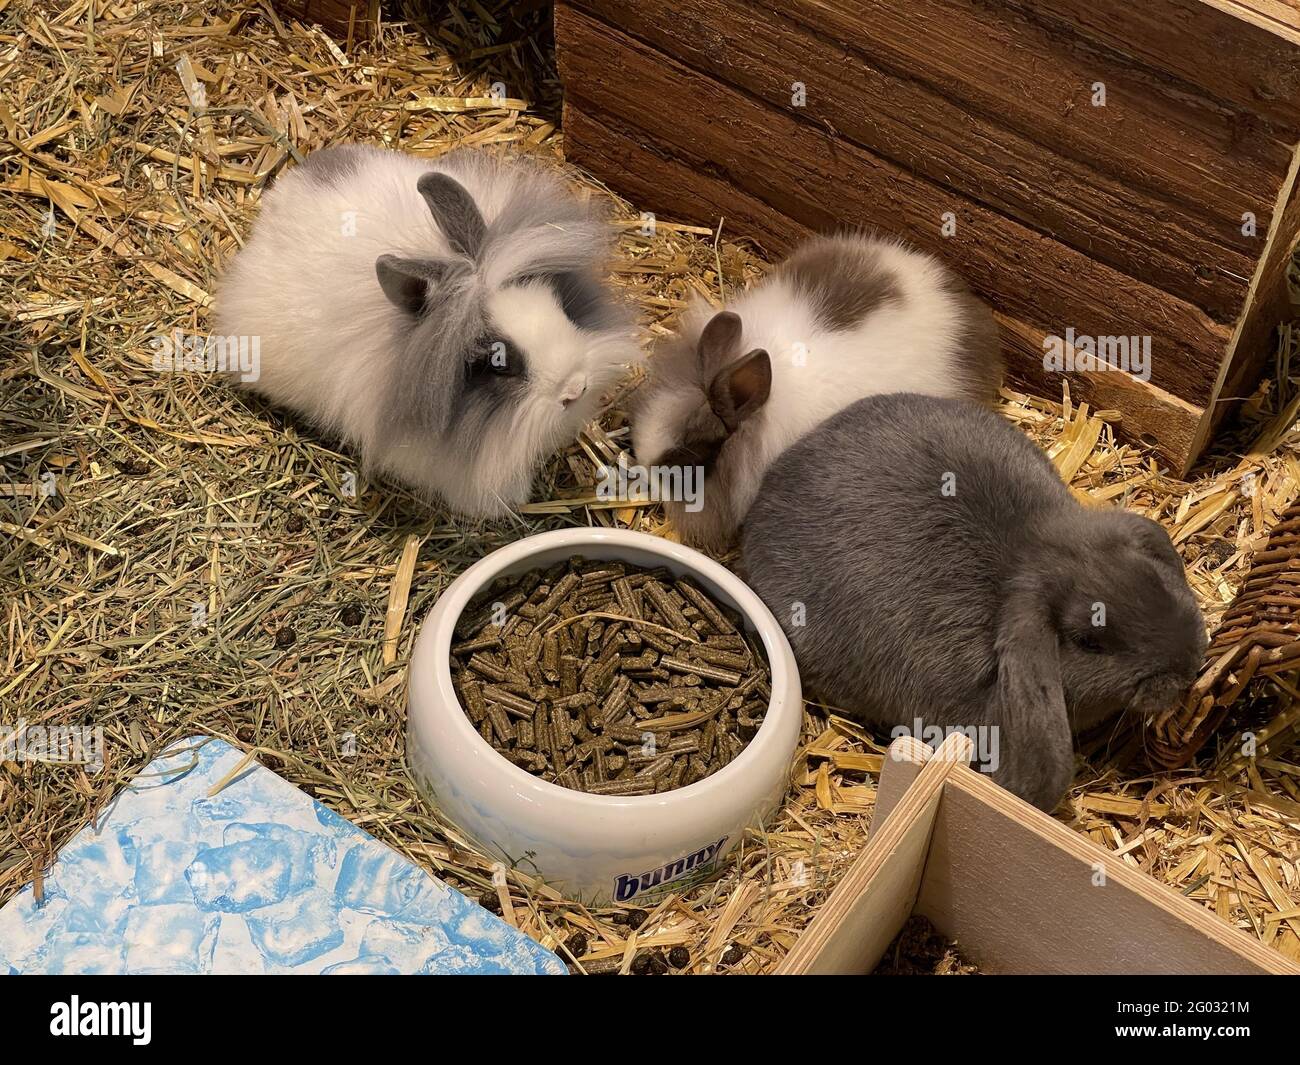 Cute baby bunnies eating food Stock Photo